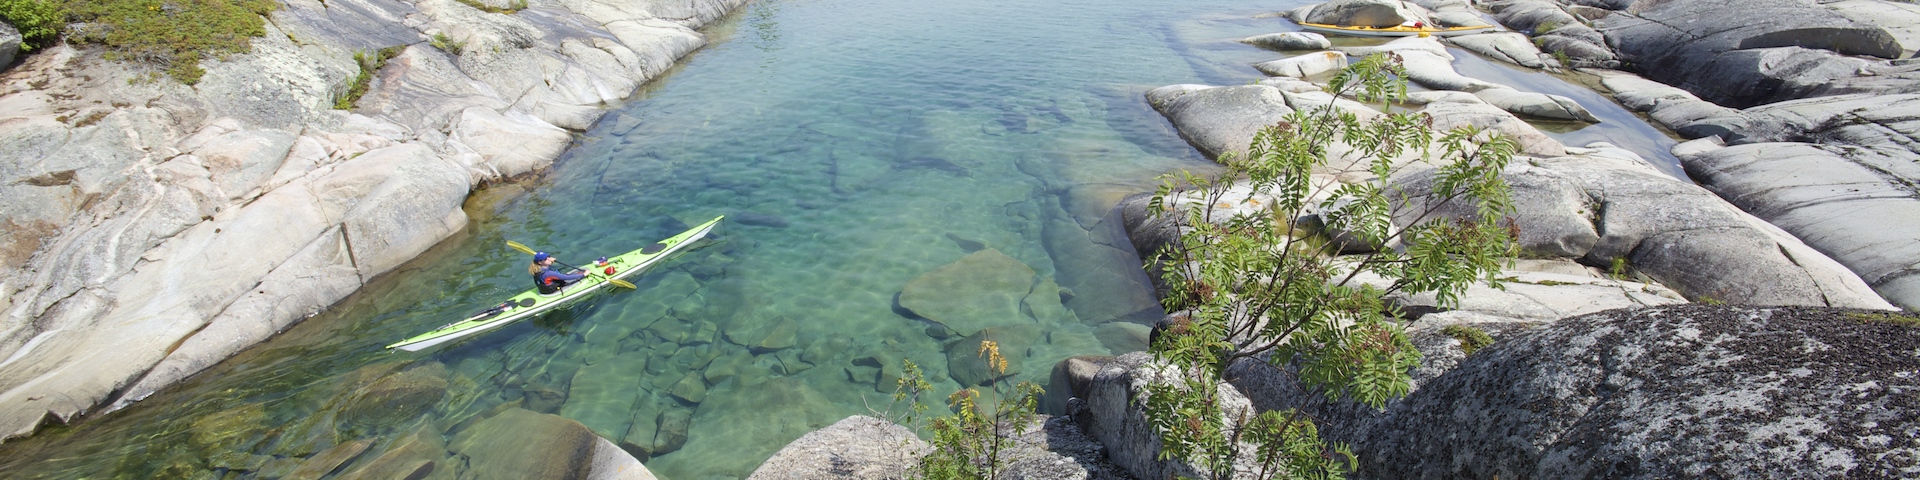 Lake Superior - Sea Kayak Denison Falls by Naturally Superior Adventures - Image 231